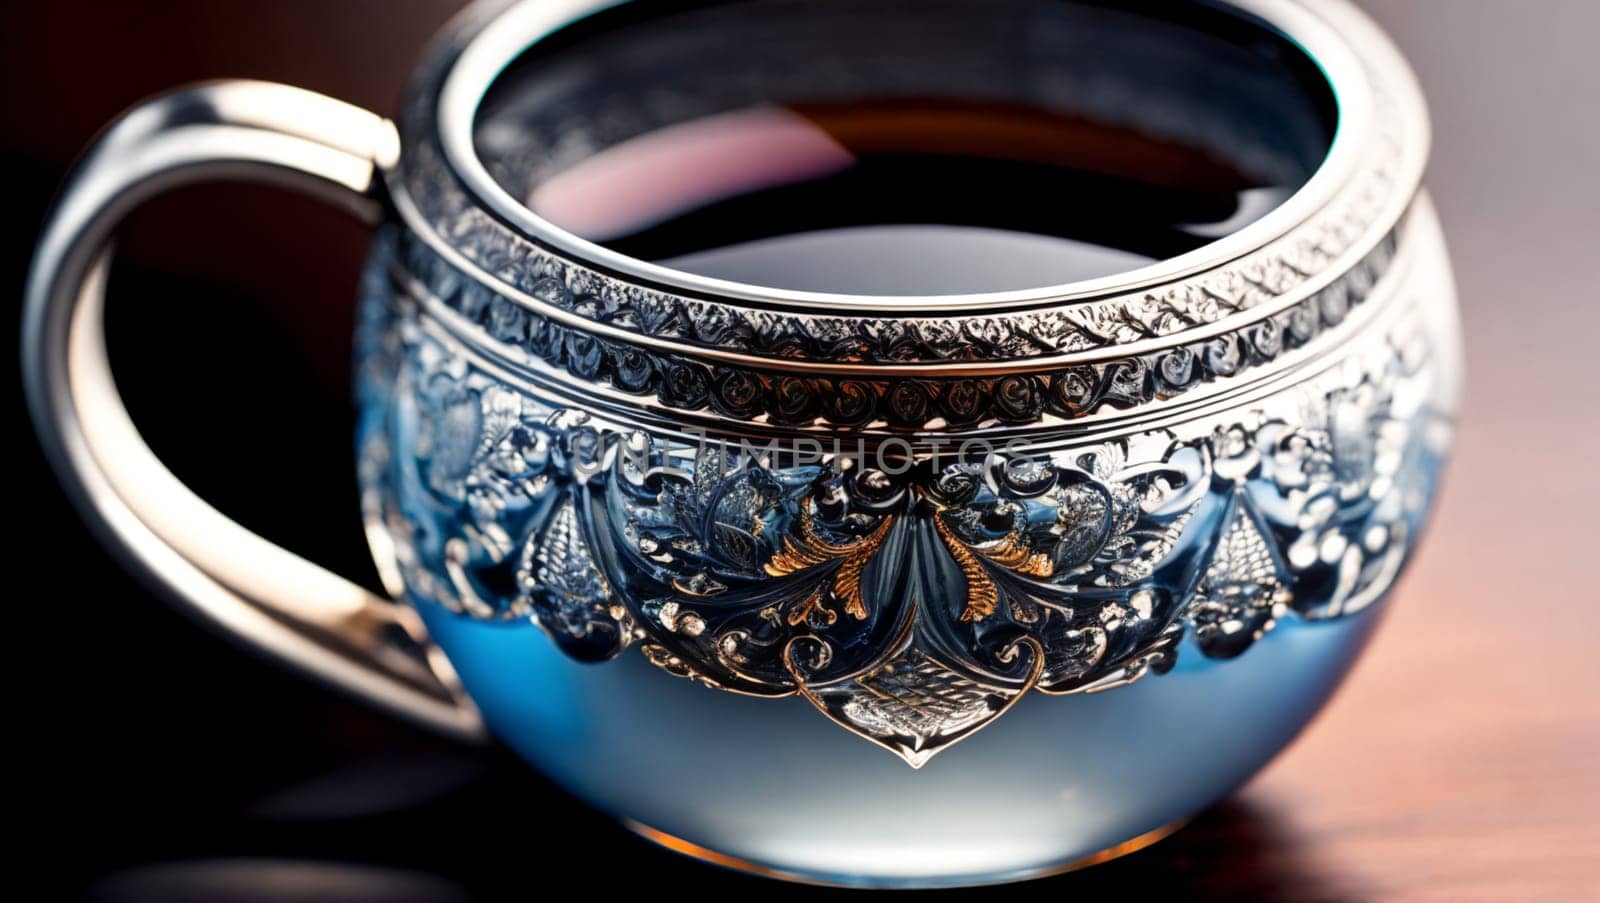 Beautiful decorative tea infused mug on a dark wooden table. by XabiDonostia